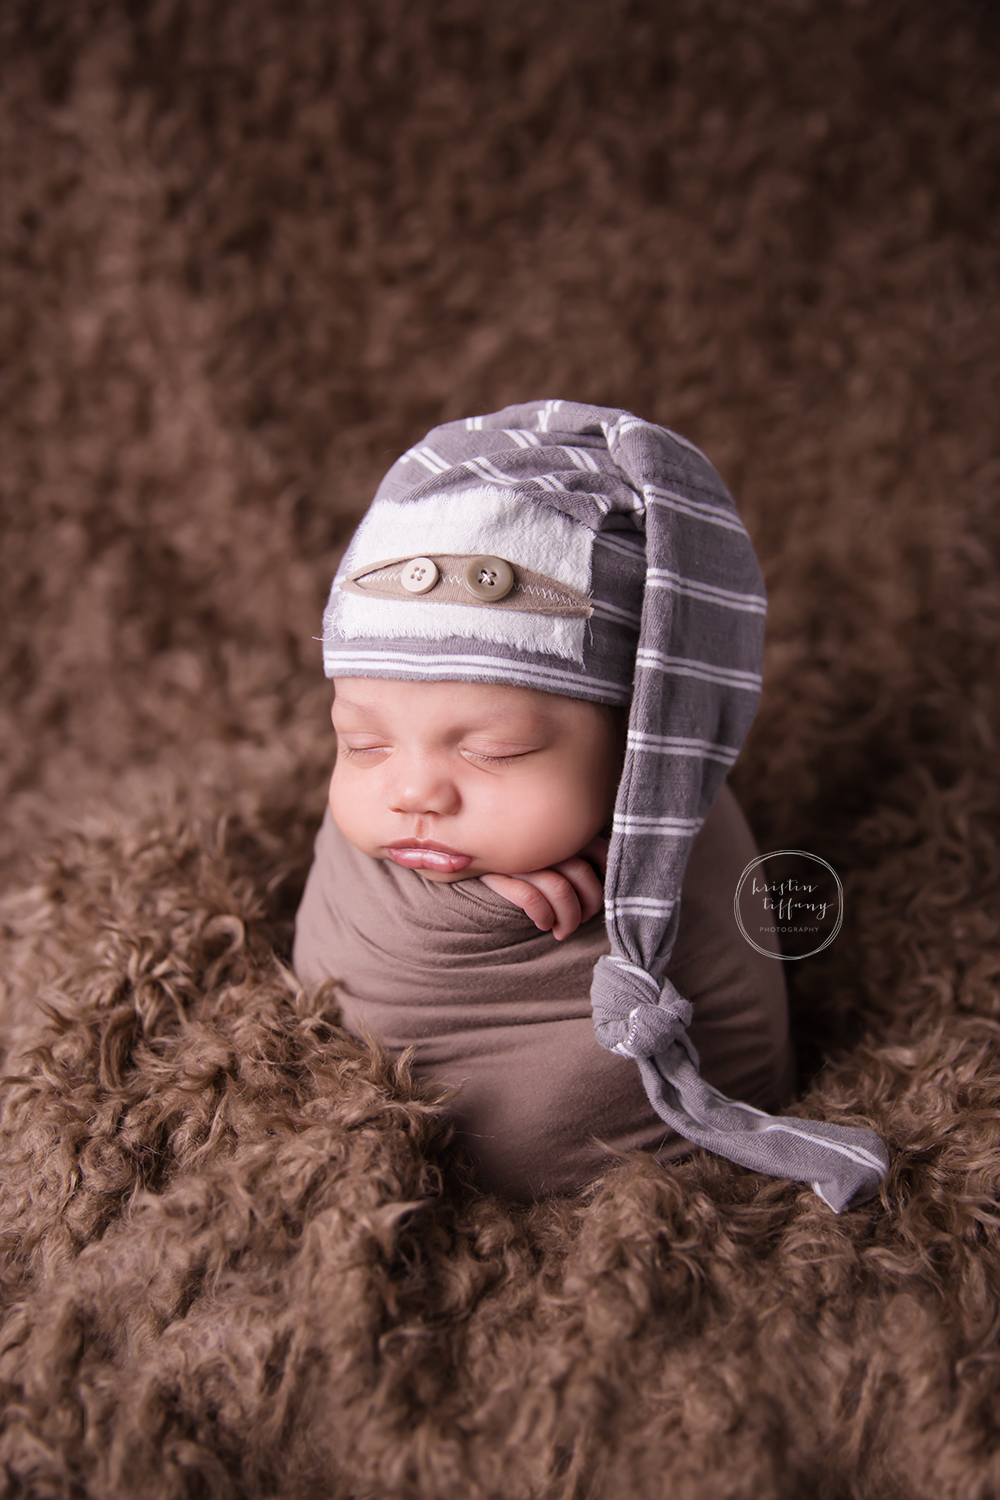 a photo of a newborn baby in potato sack pose